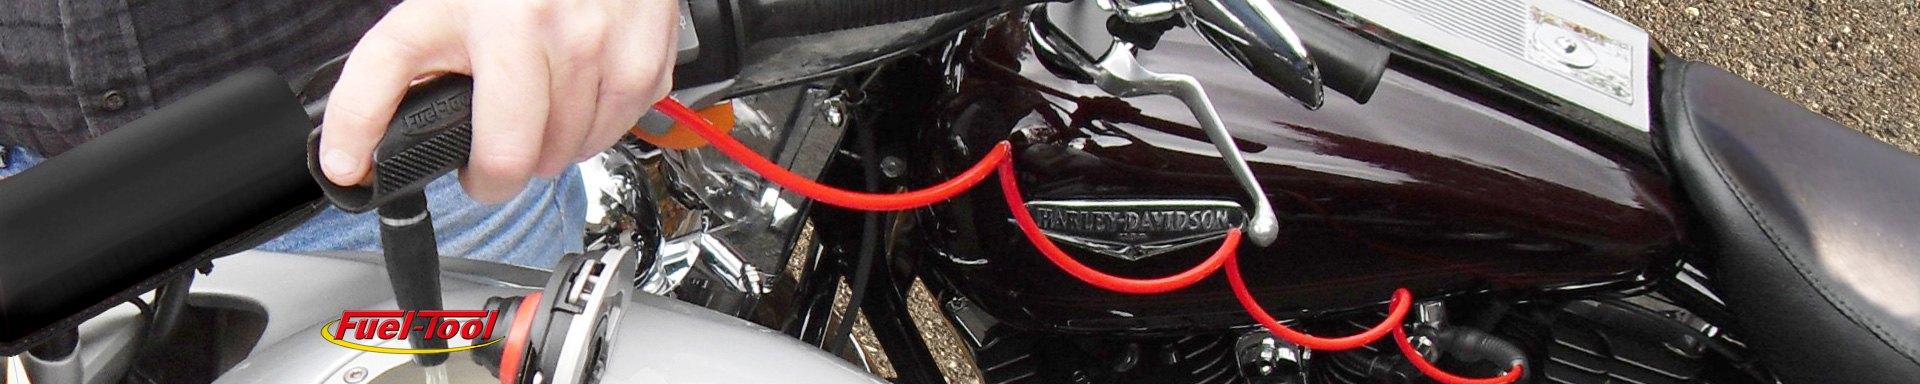 Fuel Tool Check Valve Lower O-Rings 5-Pack #MC200-5 Harley Davidson